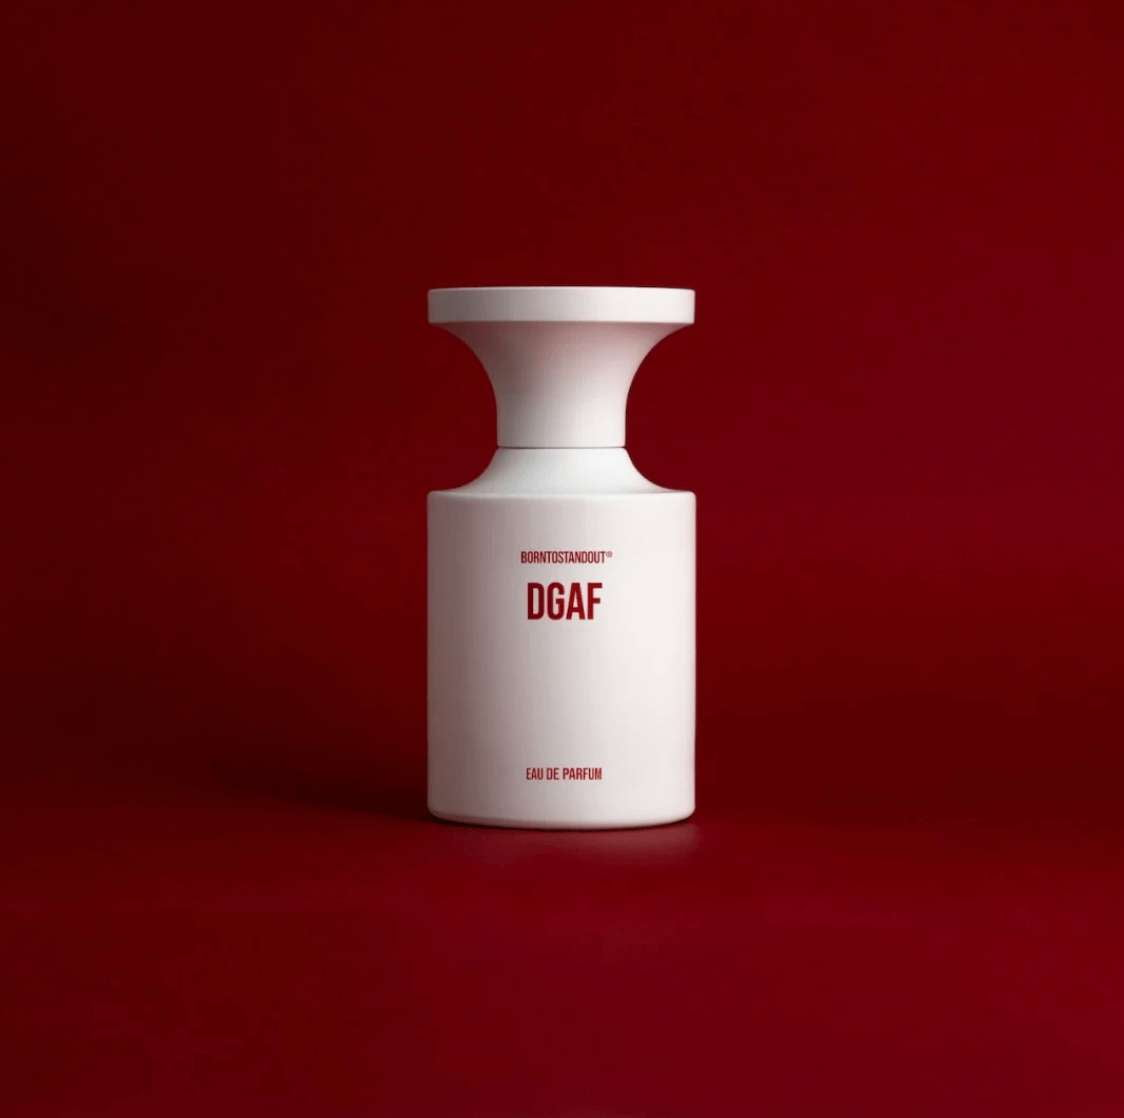 DGAF - BORNTOSTANDOUT - INDIEHOUSE modern fragrances